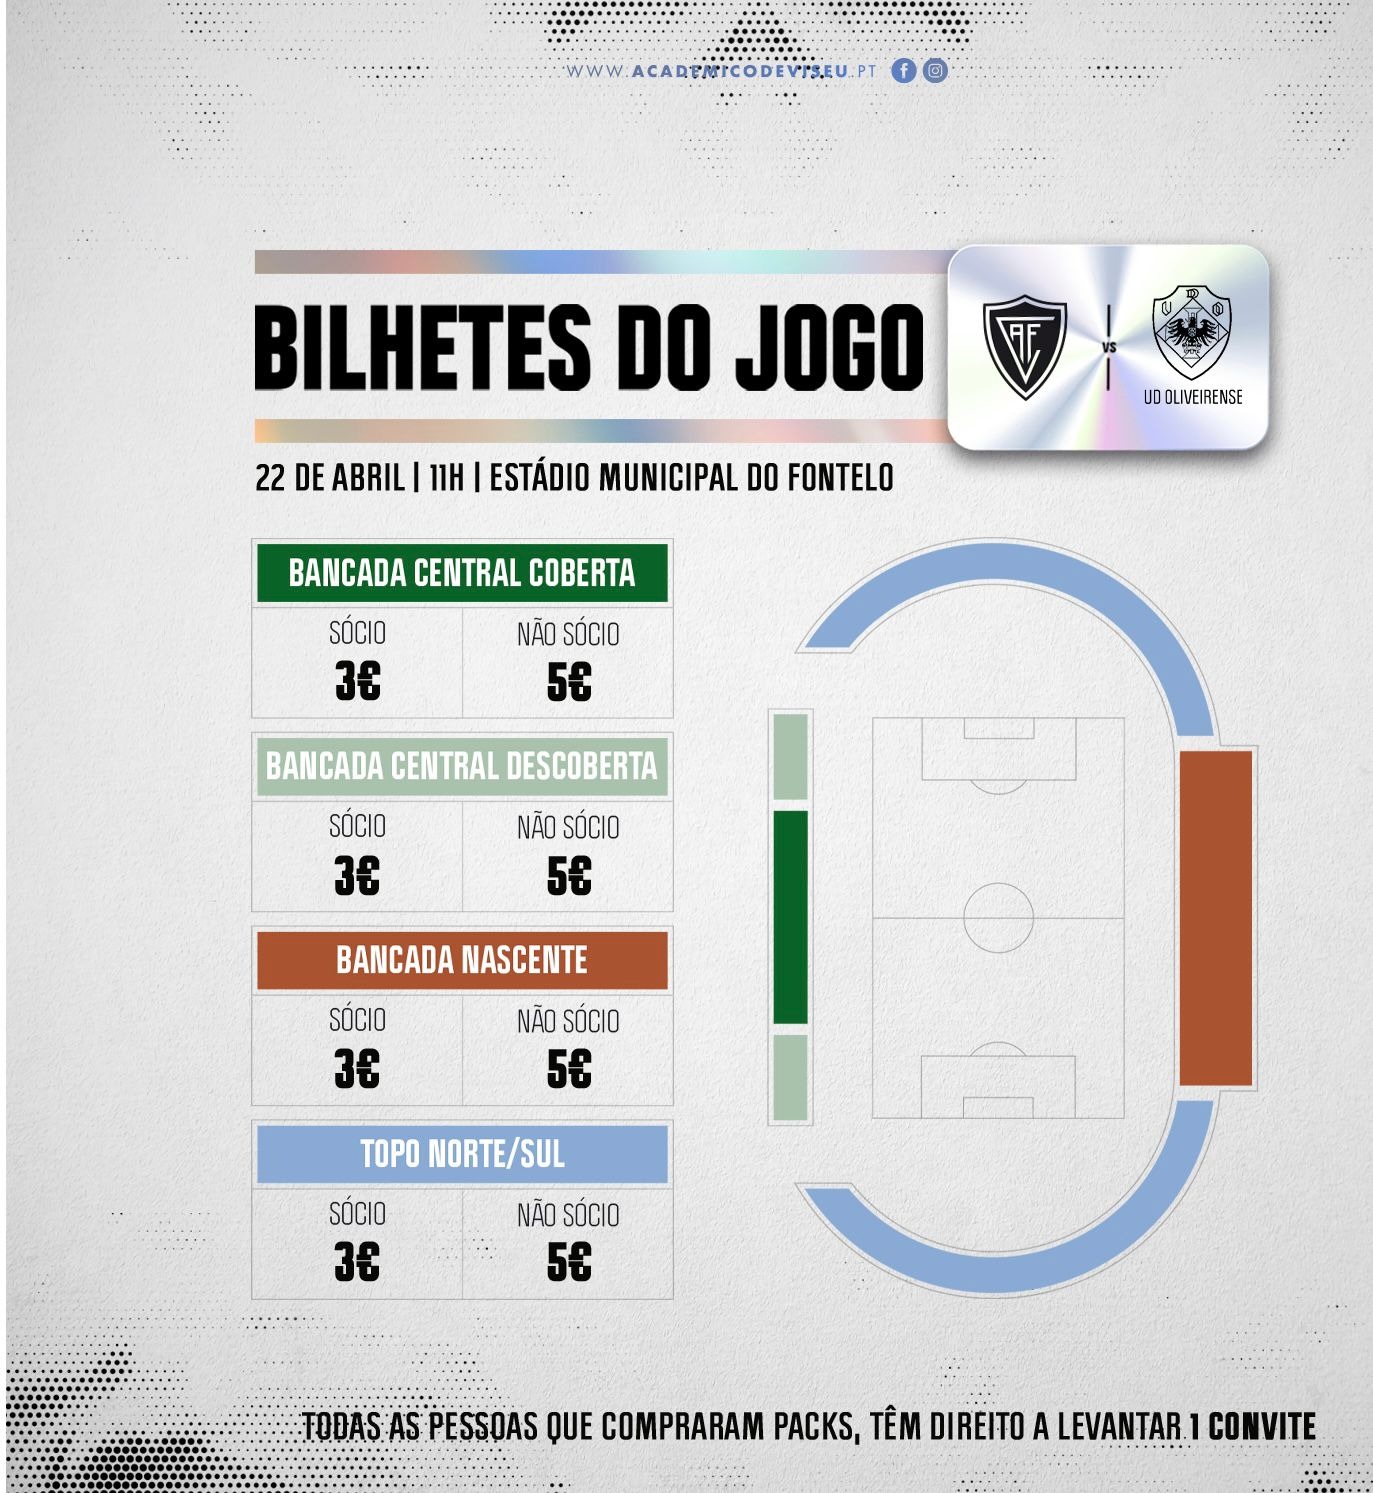 Bilheteira: AC Viseu vs UD Oliveirense